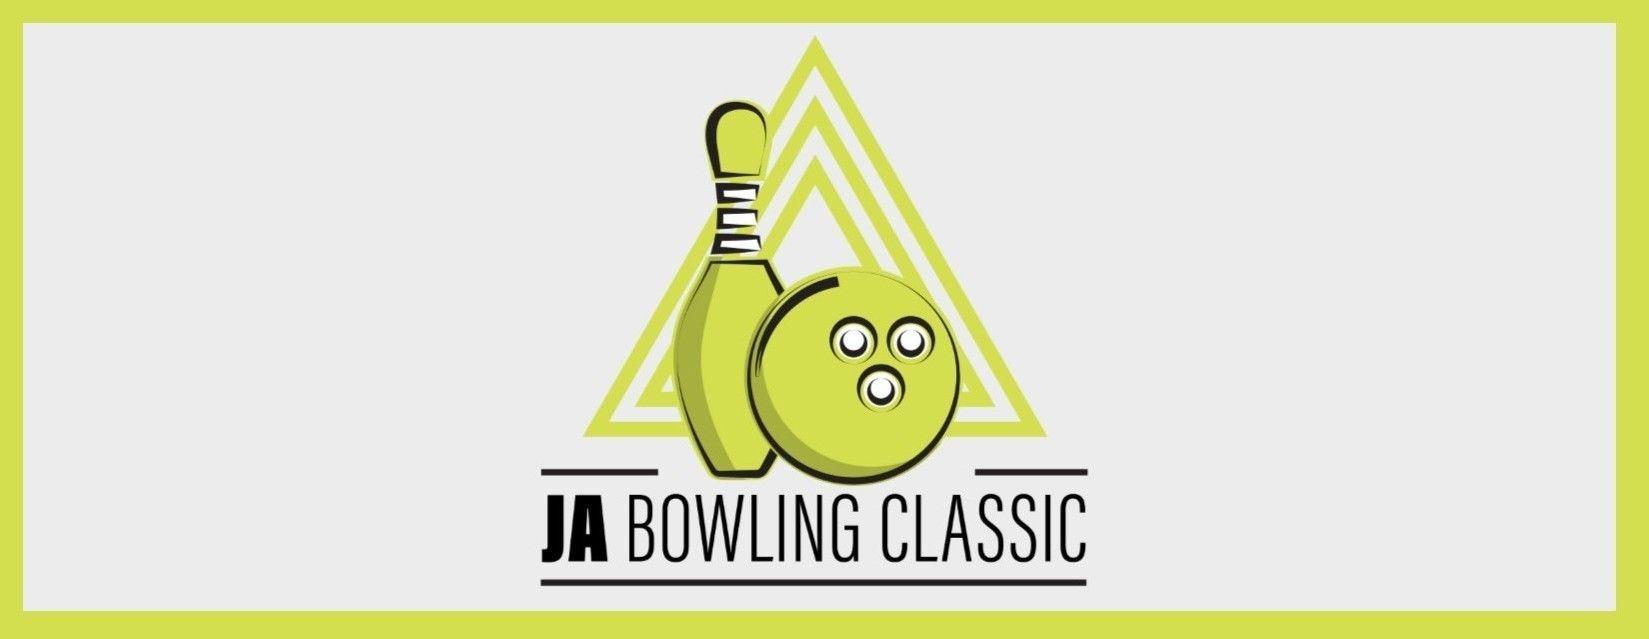 Fred Meyer Logo - 2018 Fred Meyer JA Bowling Classic - 2019 Fred Meyer Bowling Classic